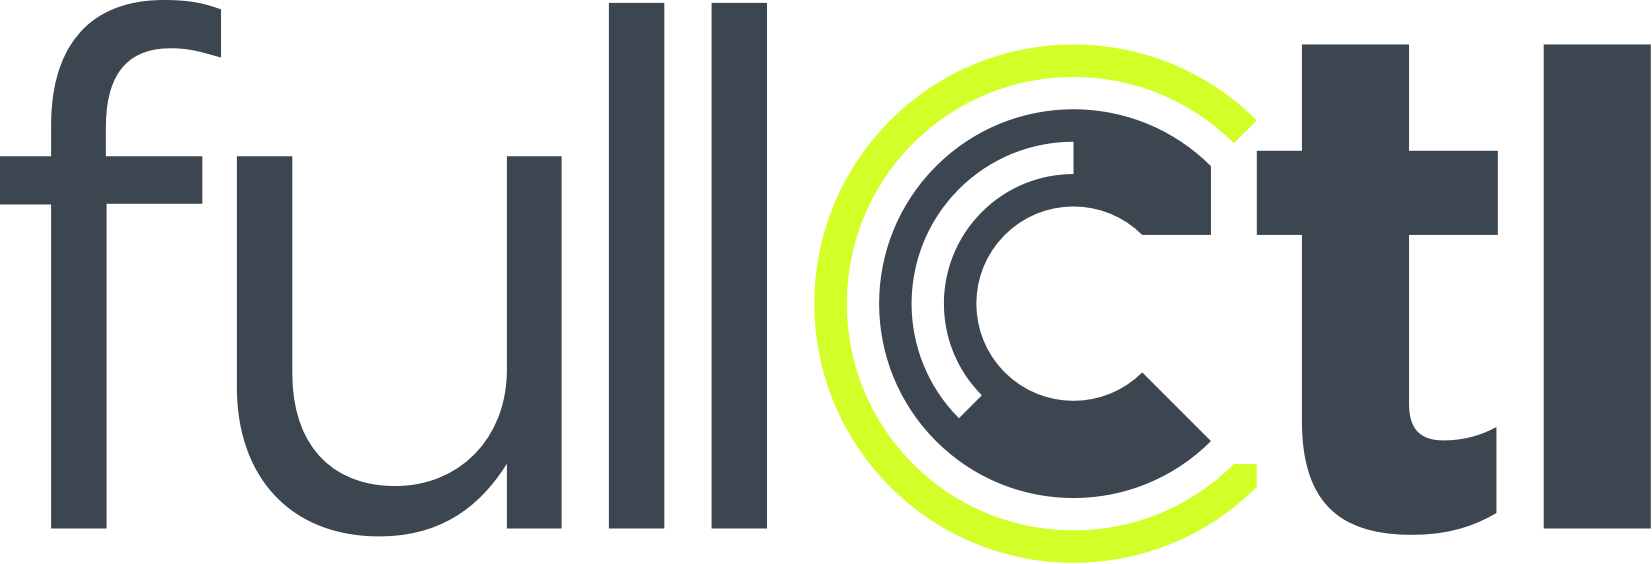 FullCtl Logo